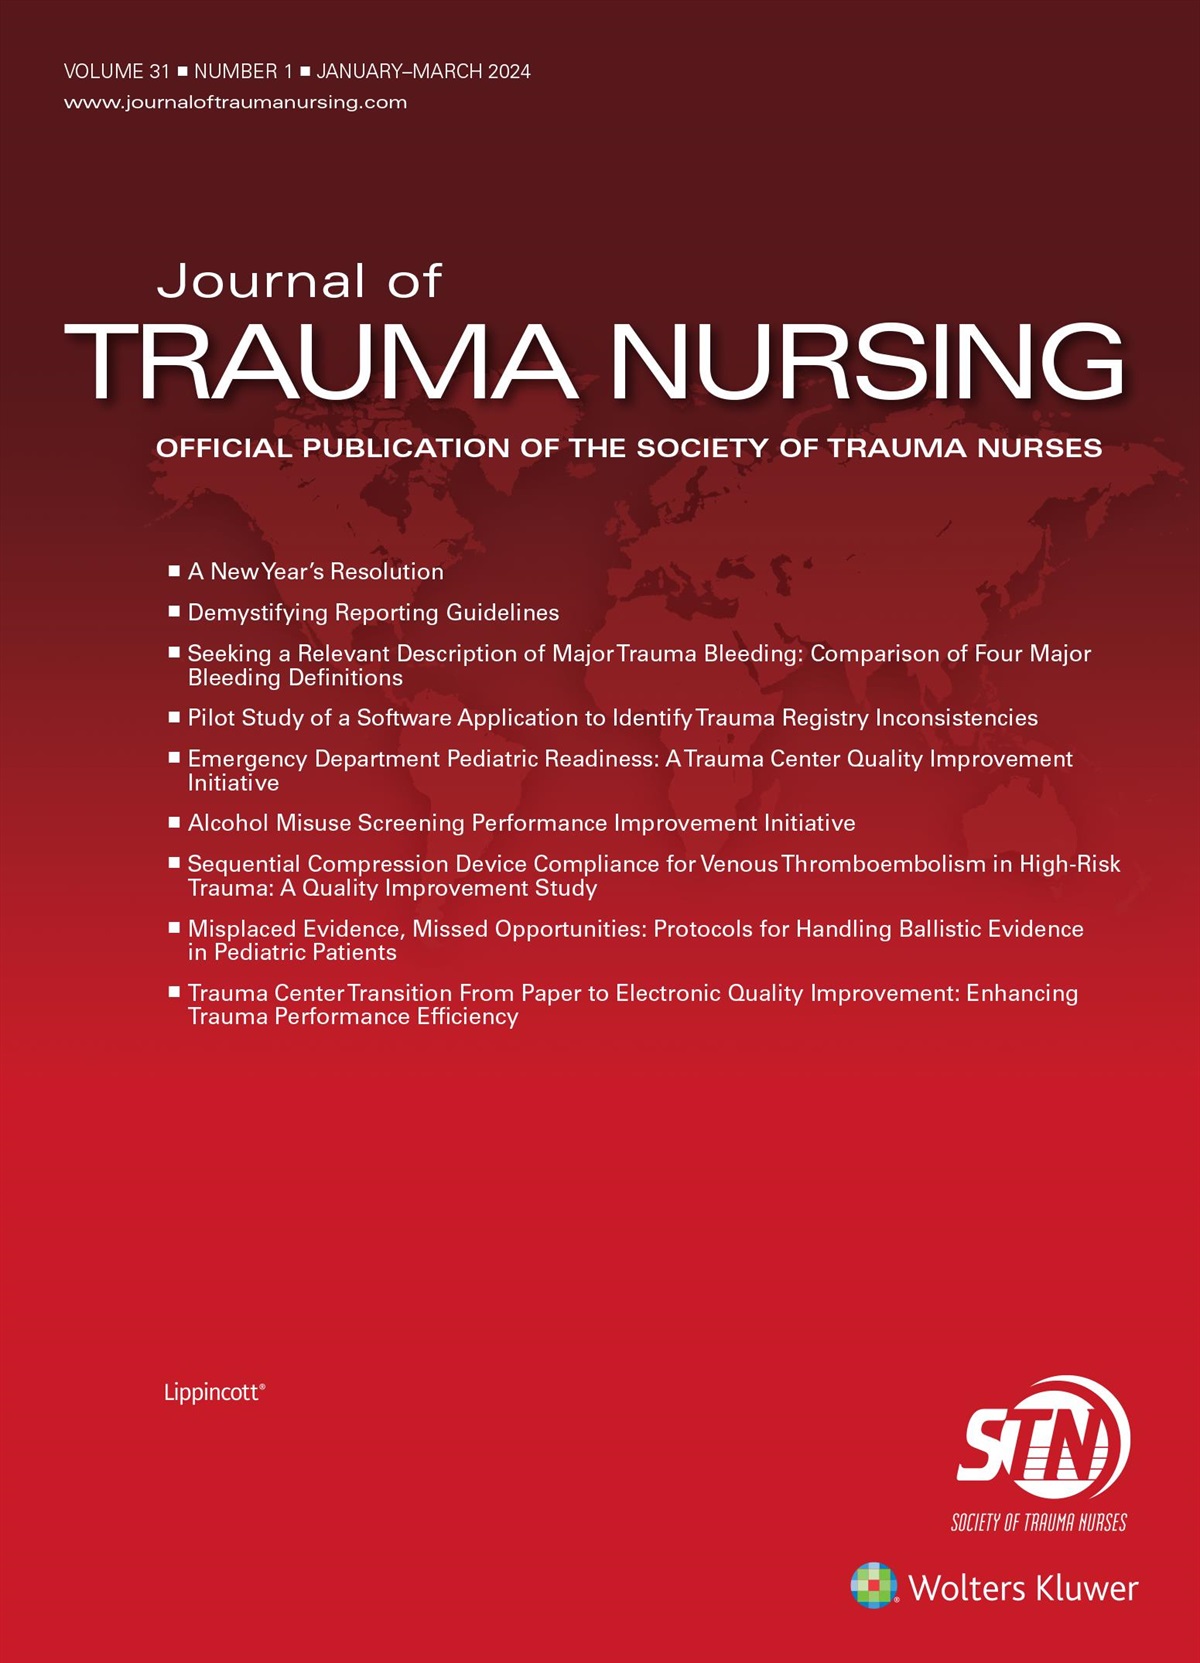 Seeking a Relevant Description of Major Trauma Bleeding: Comparison of Four Major Bleeding Definitions